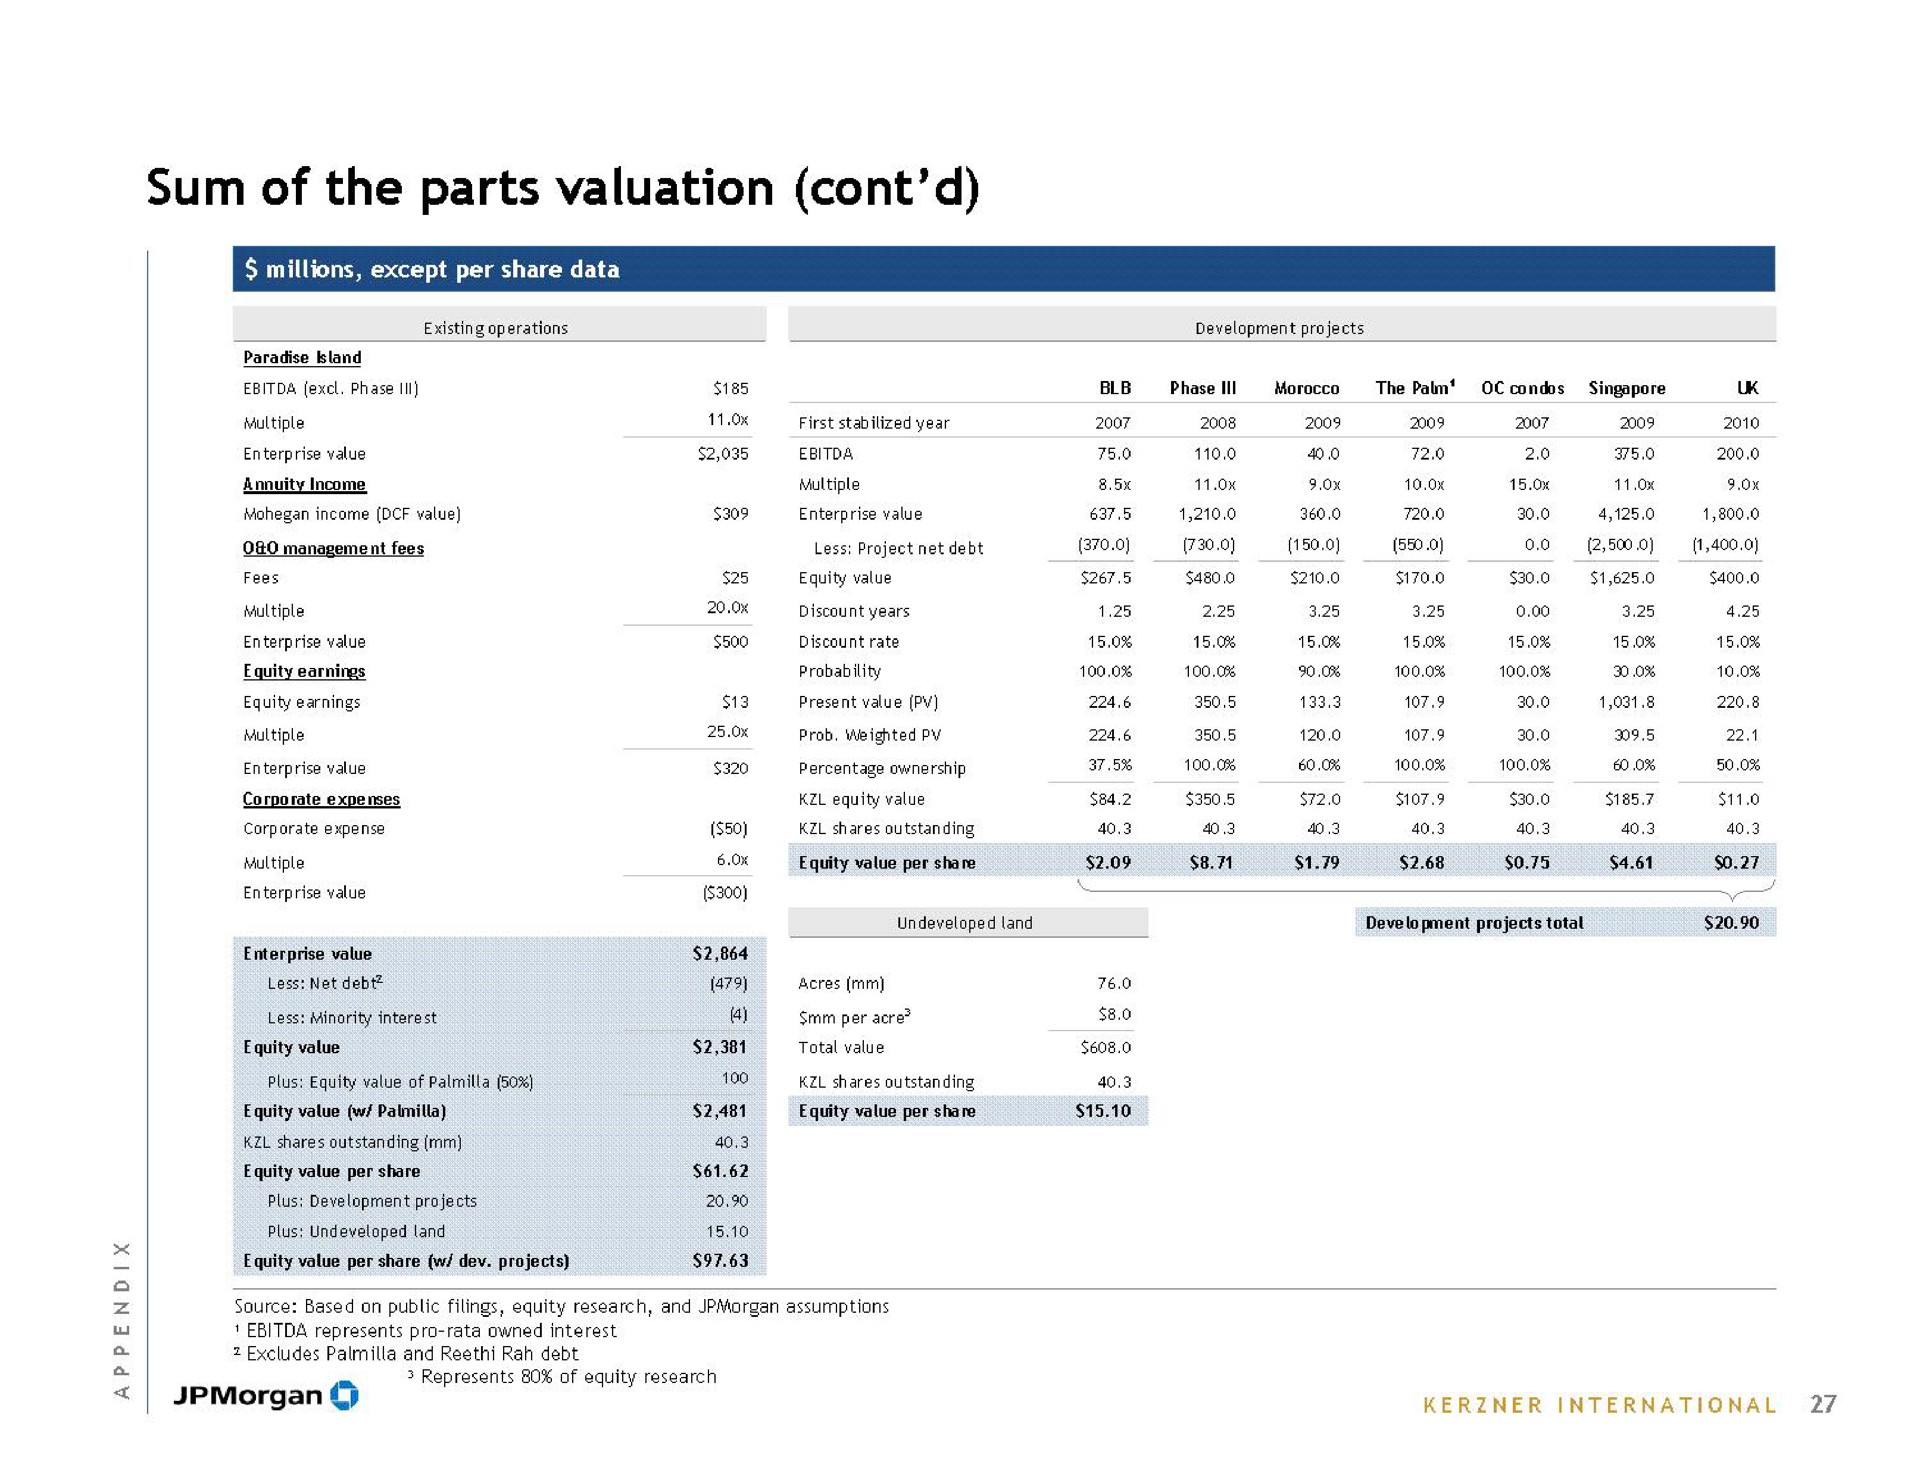 sum of the parts valuation | J.P.Morgan